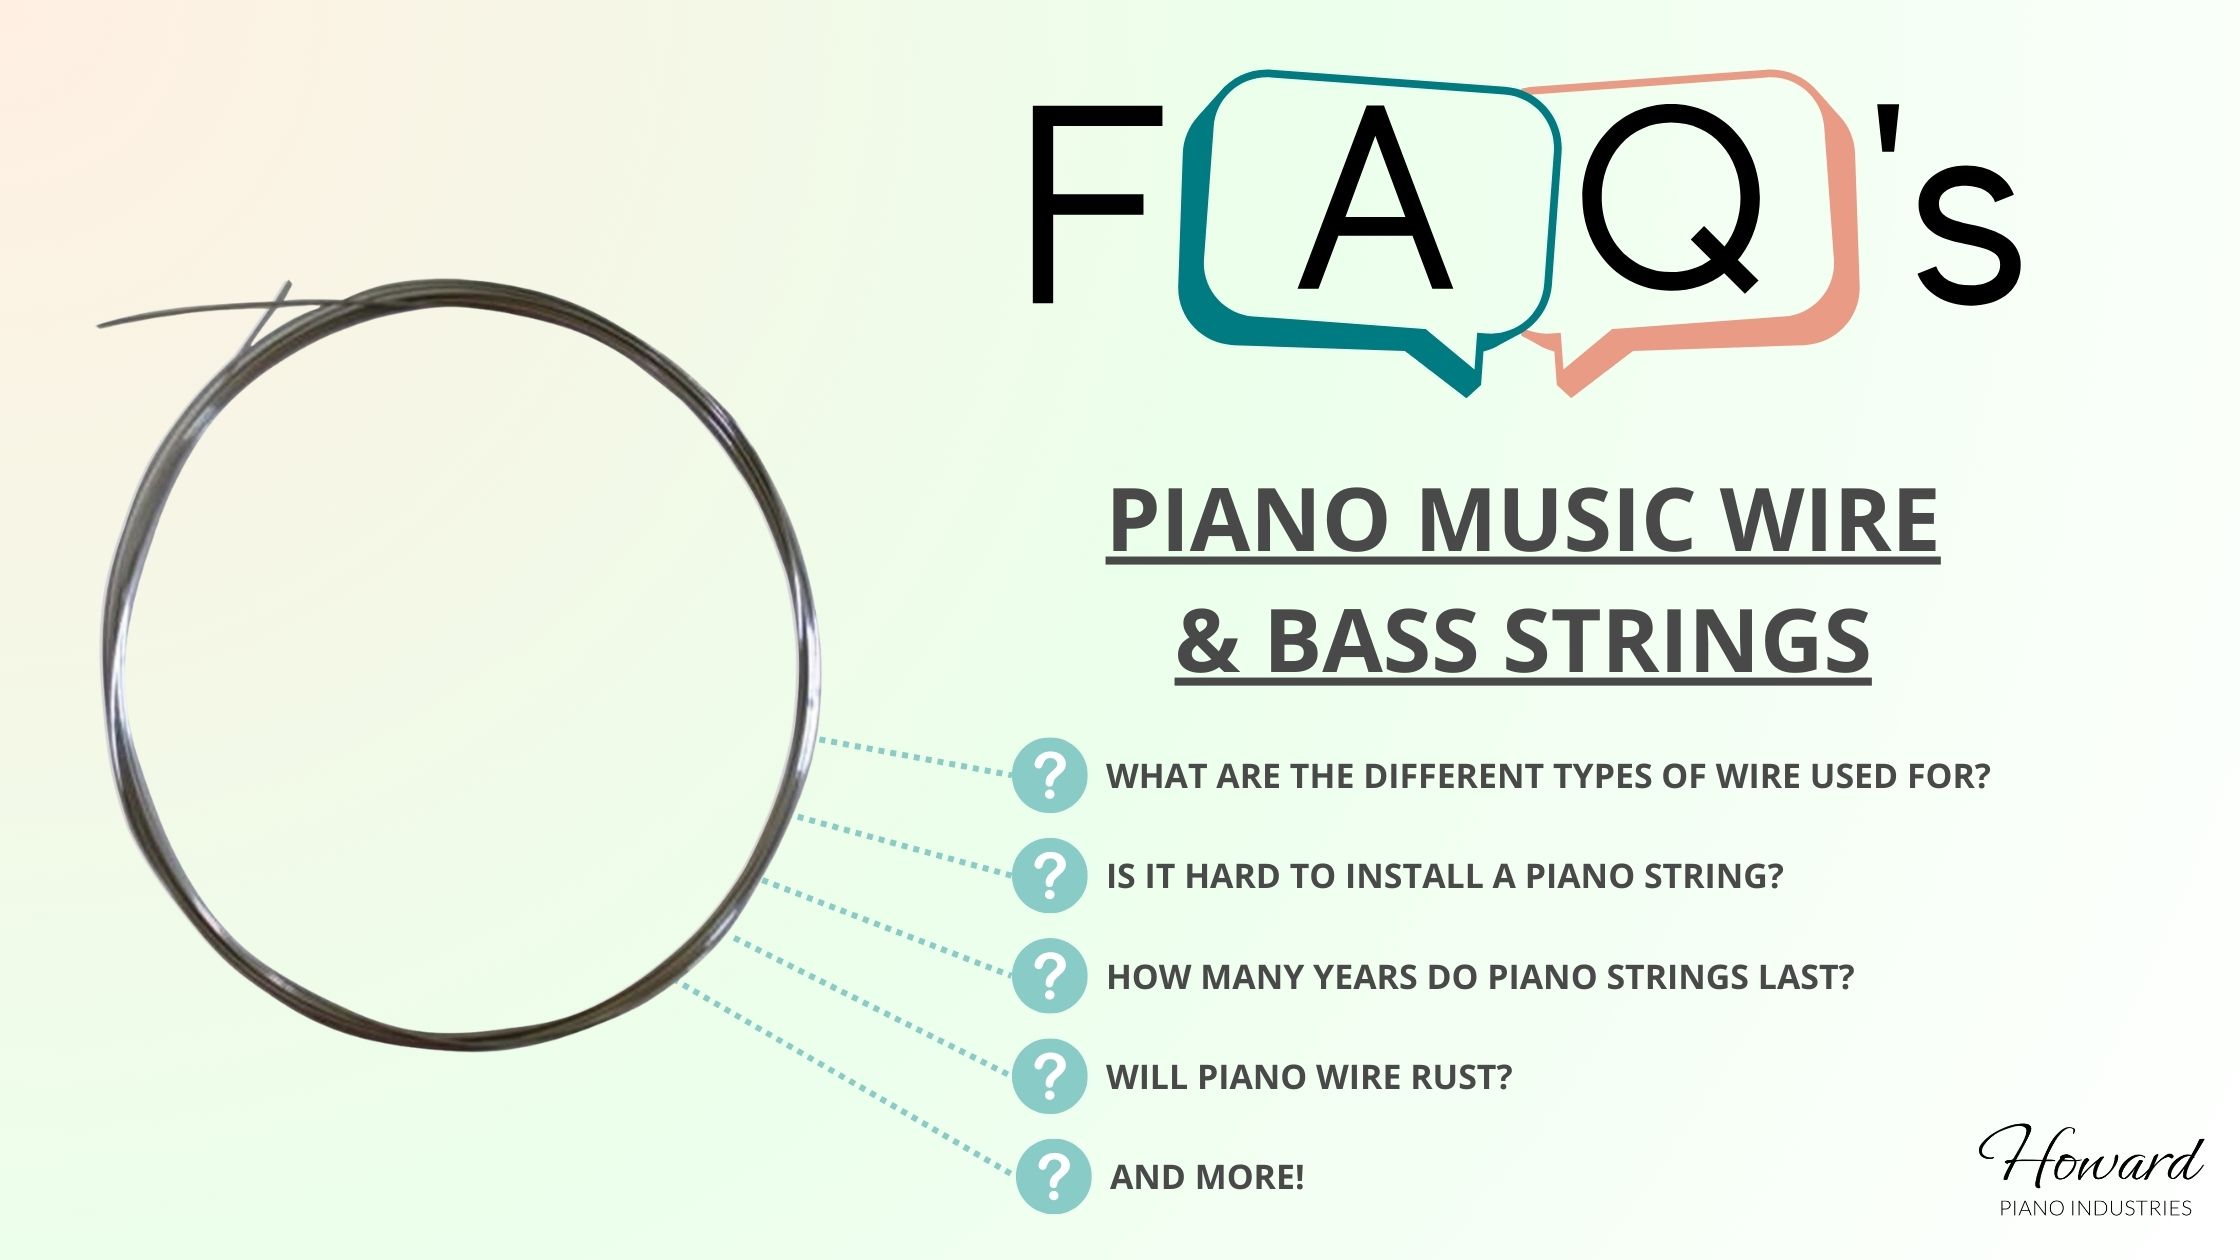 Piano Music Wire & Bass Strings FAQ's - Howard Piano Industries